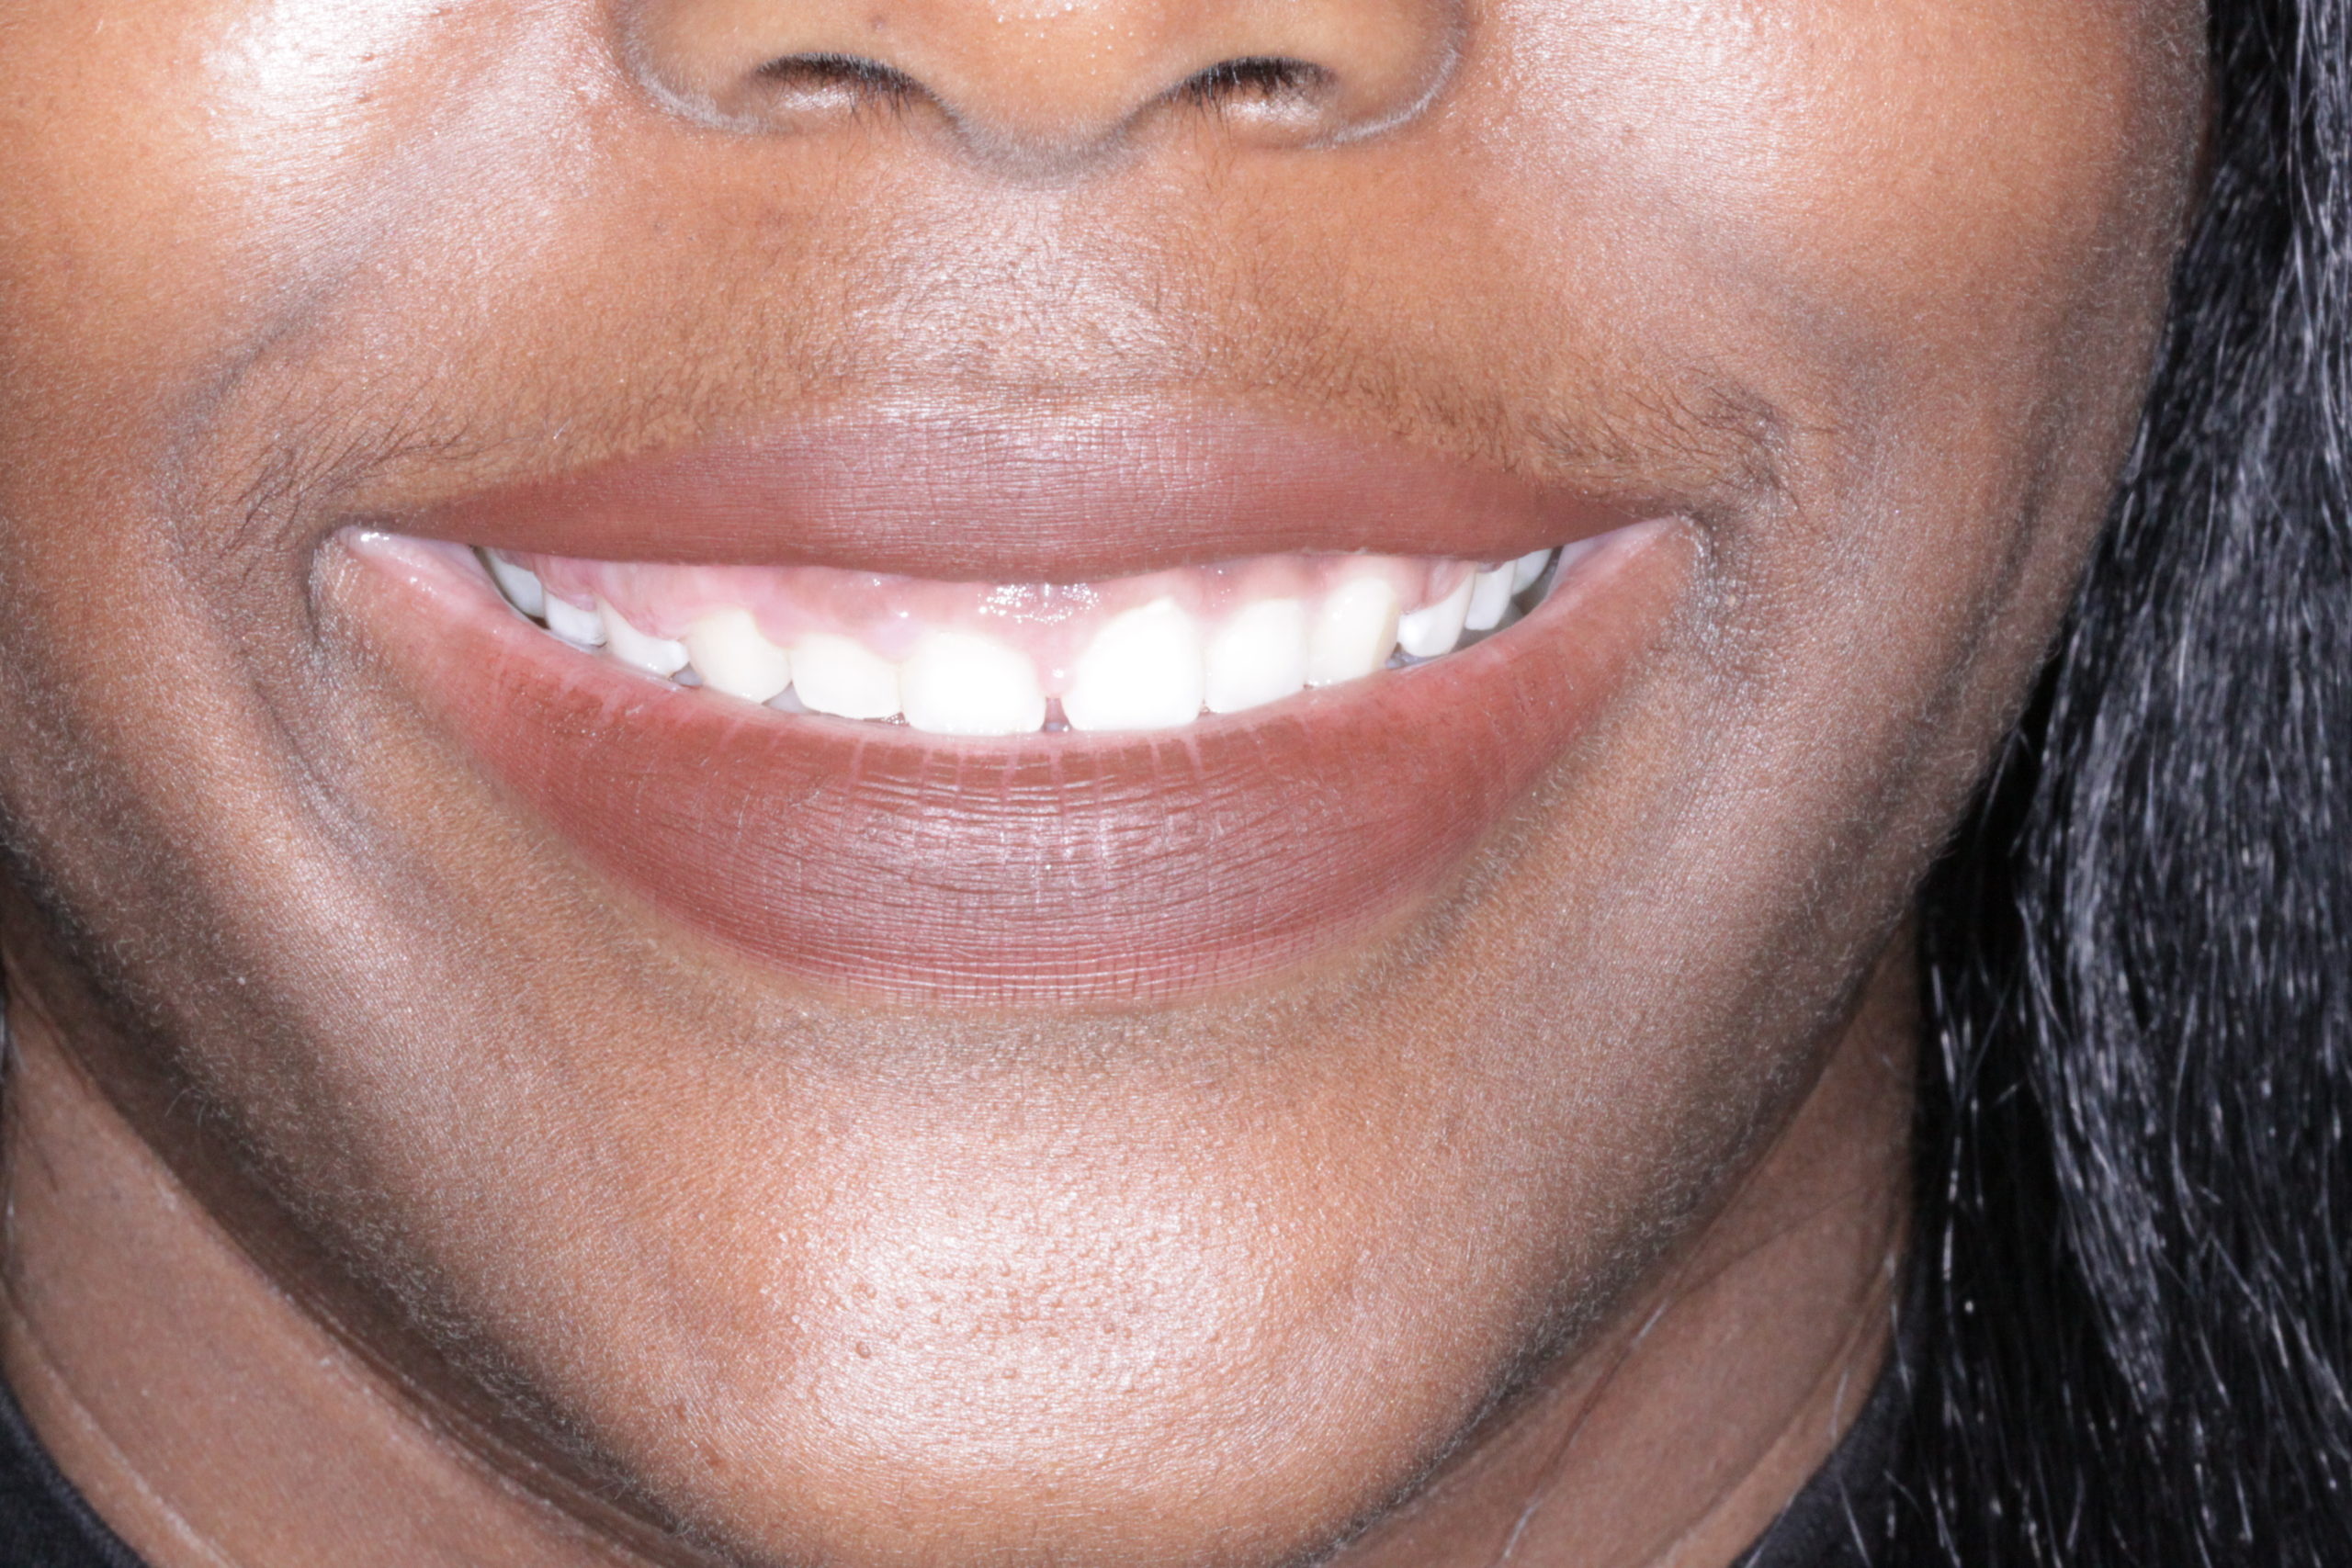 Mary - Scaled teeth